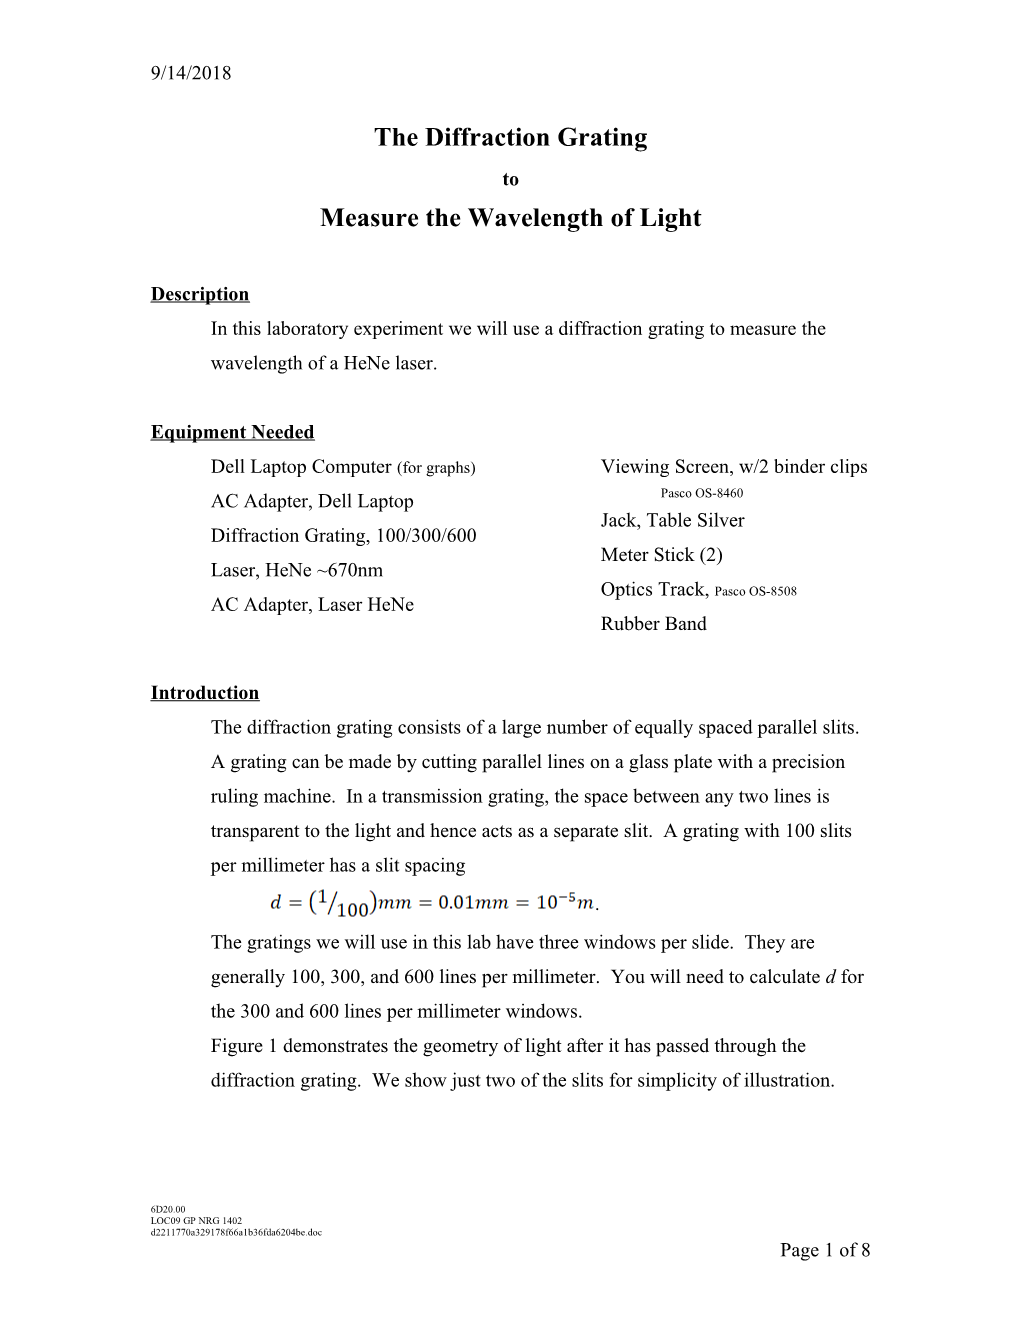 Measure the Wavelength of Light